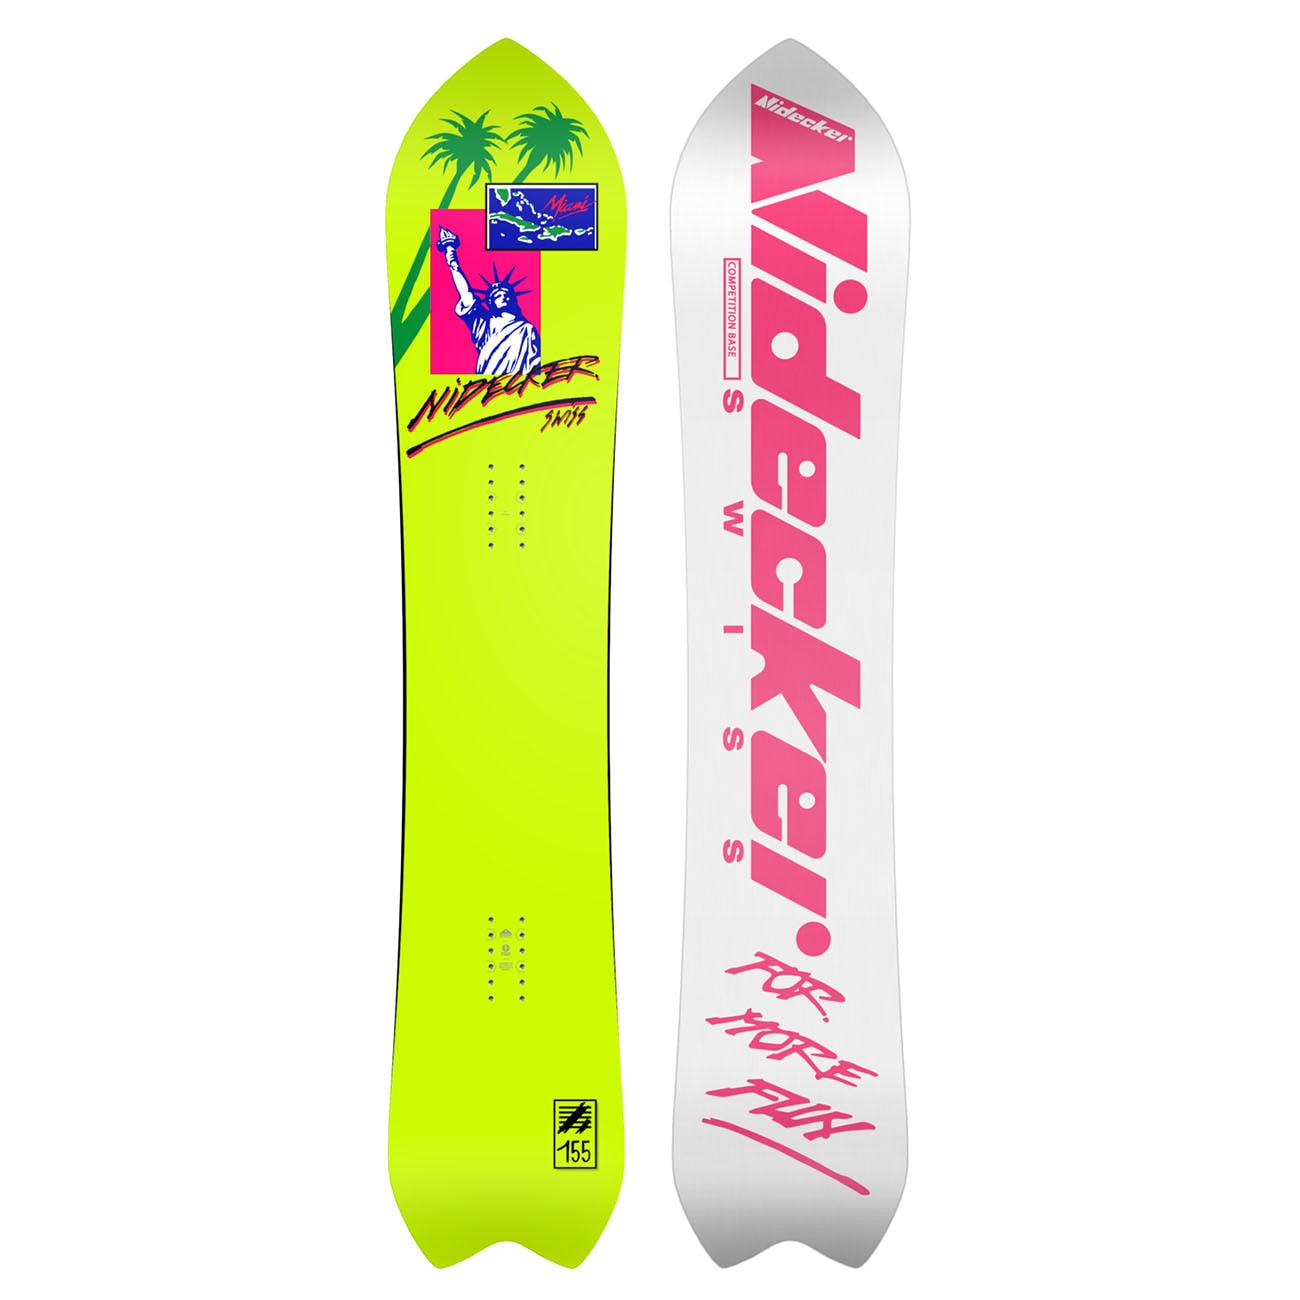 Nidecker Liberty Snowboard 